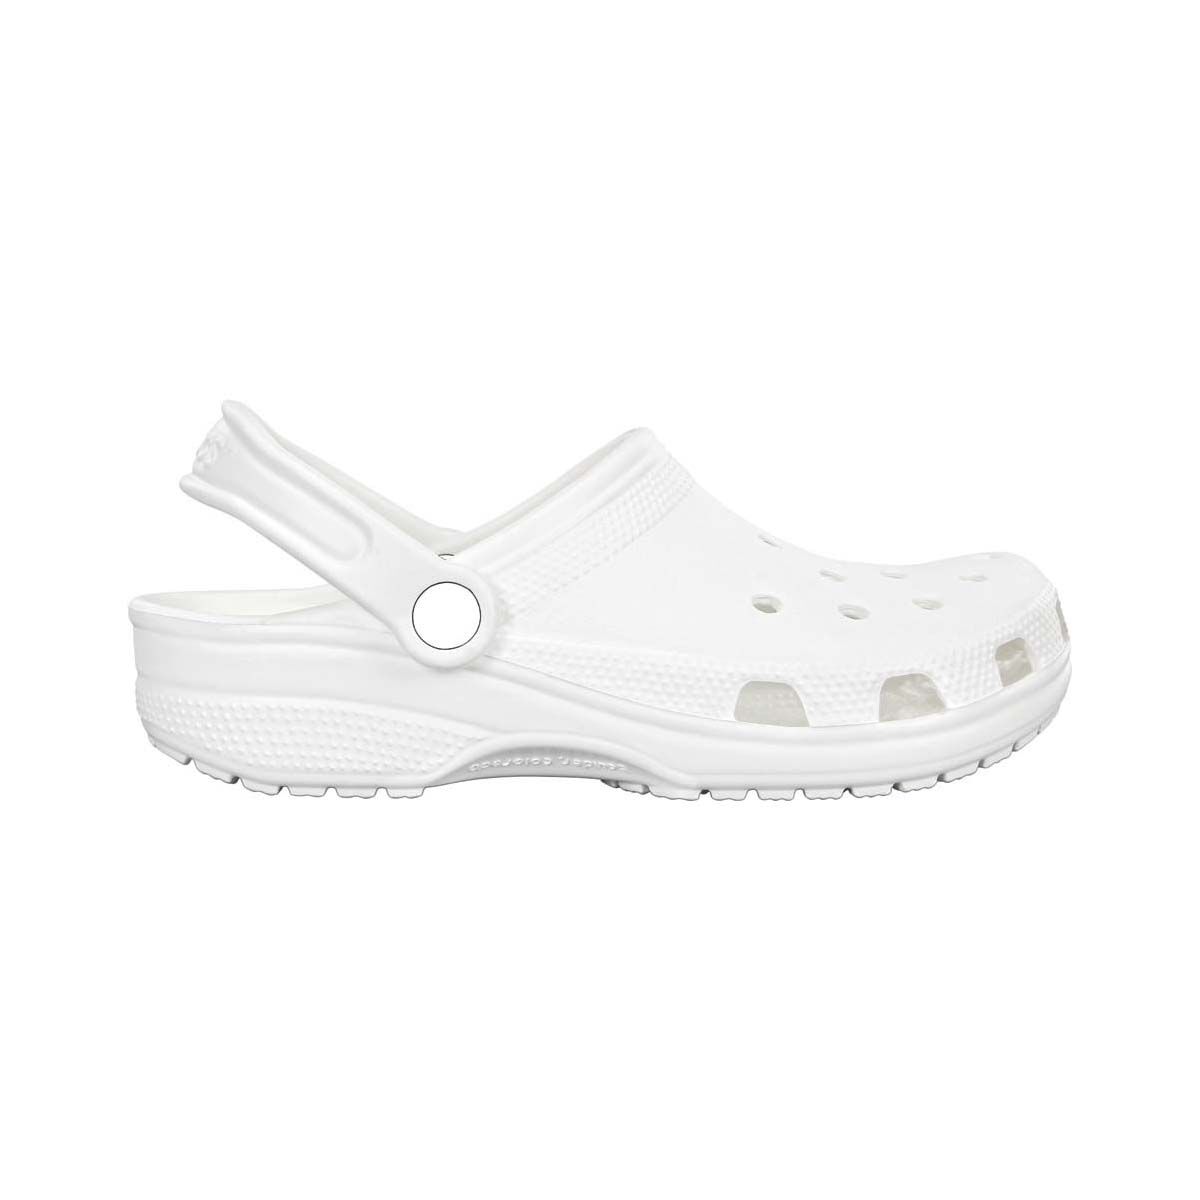 Crocs Thongs \u0026 Shoes For Sale Online 